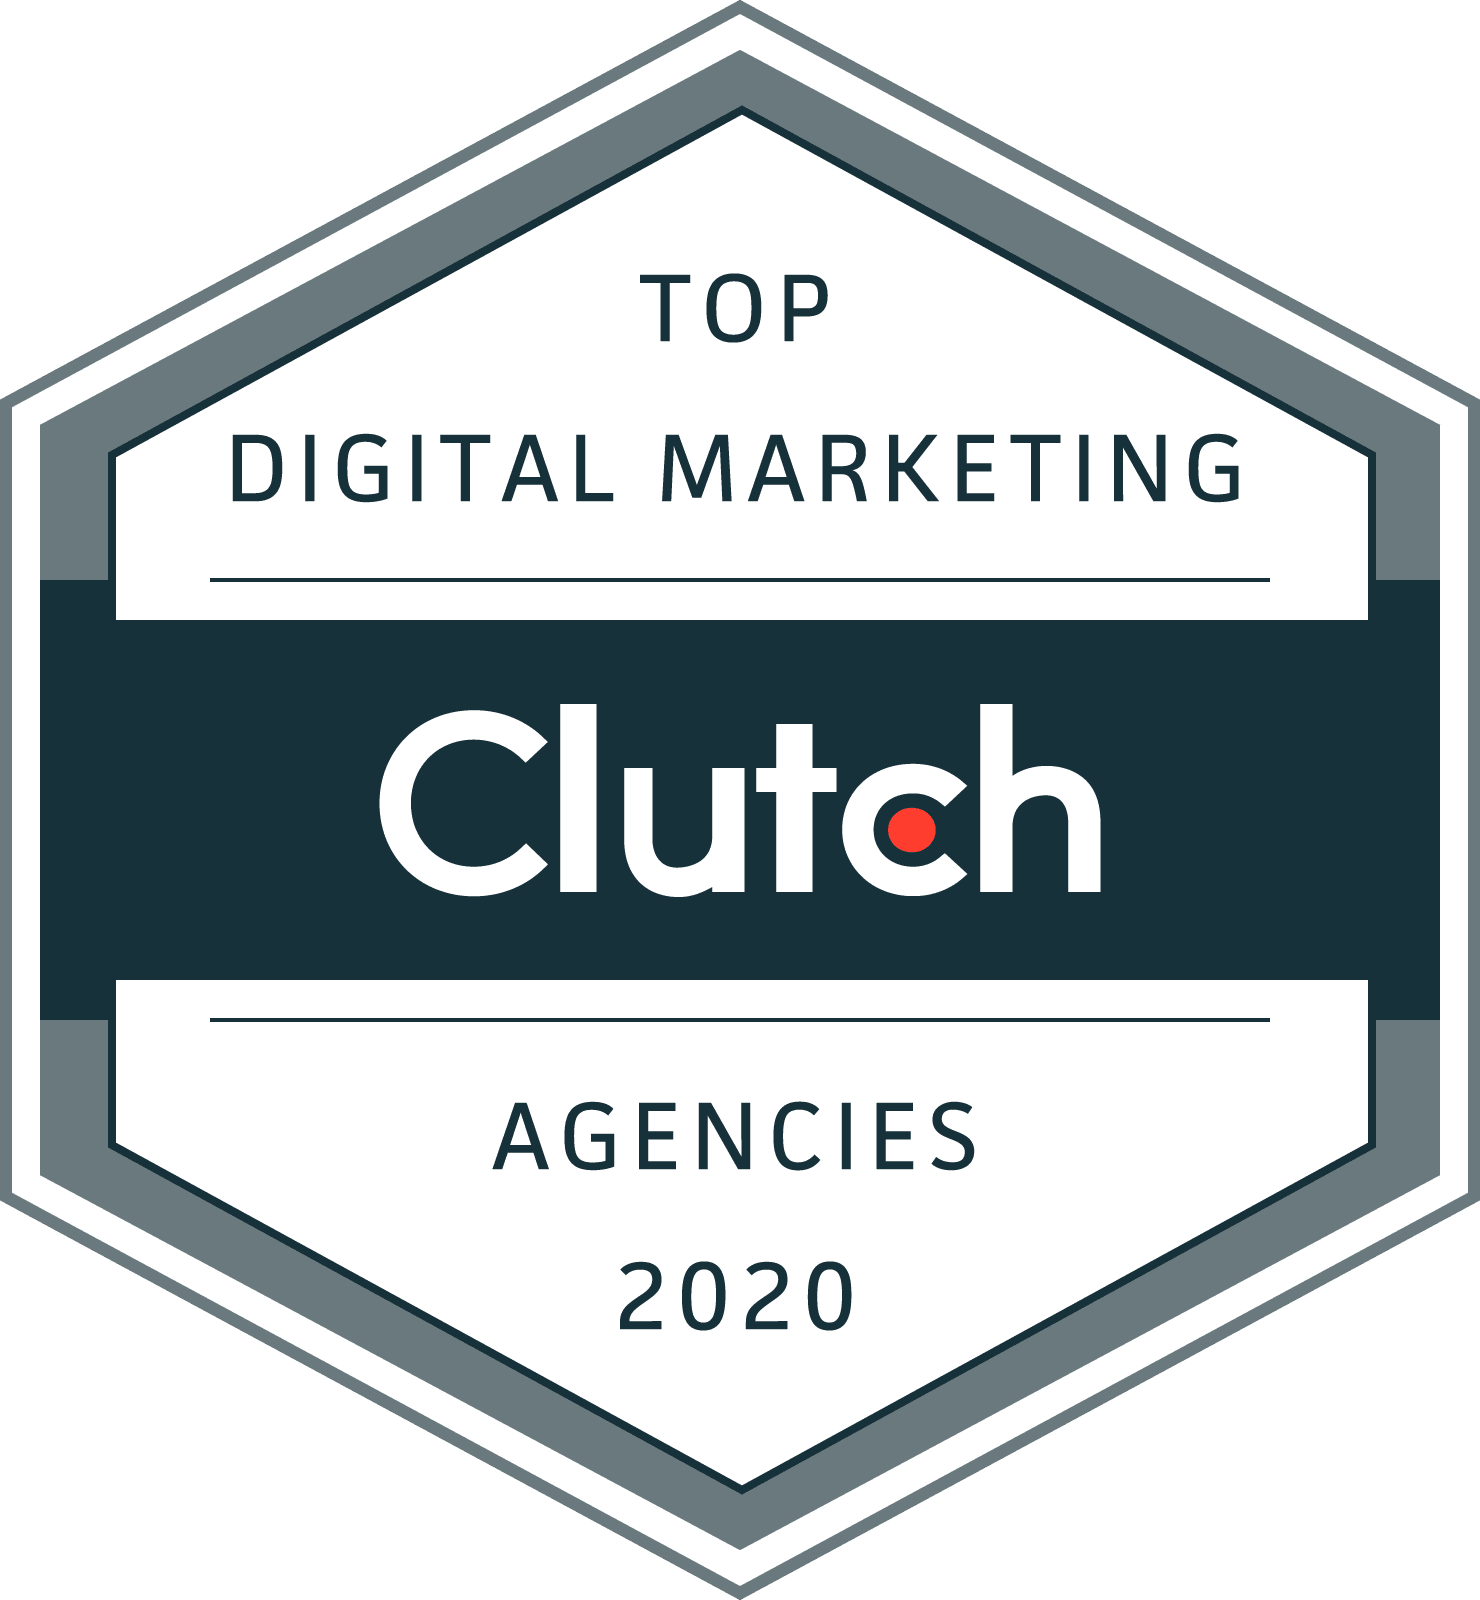 Top Digital Marketing Agencies 2020